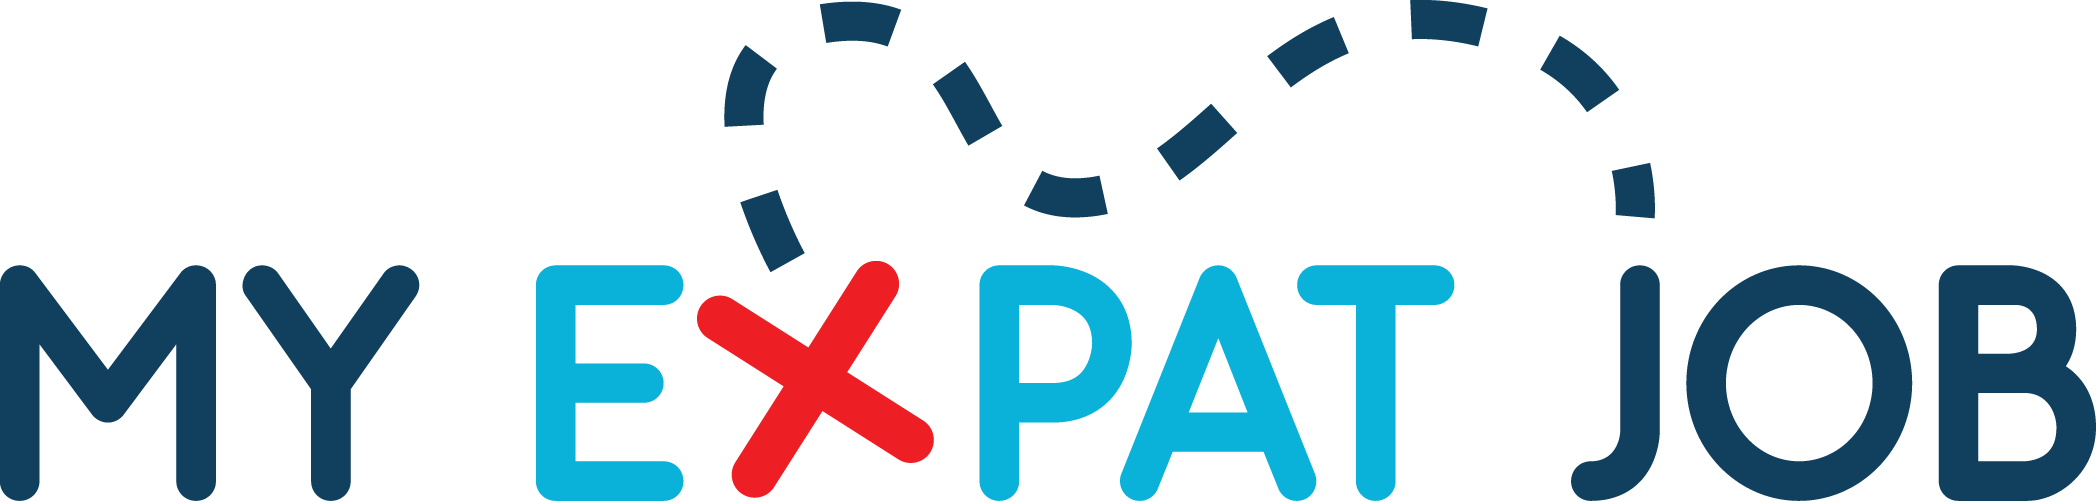 Logo myexpatjob